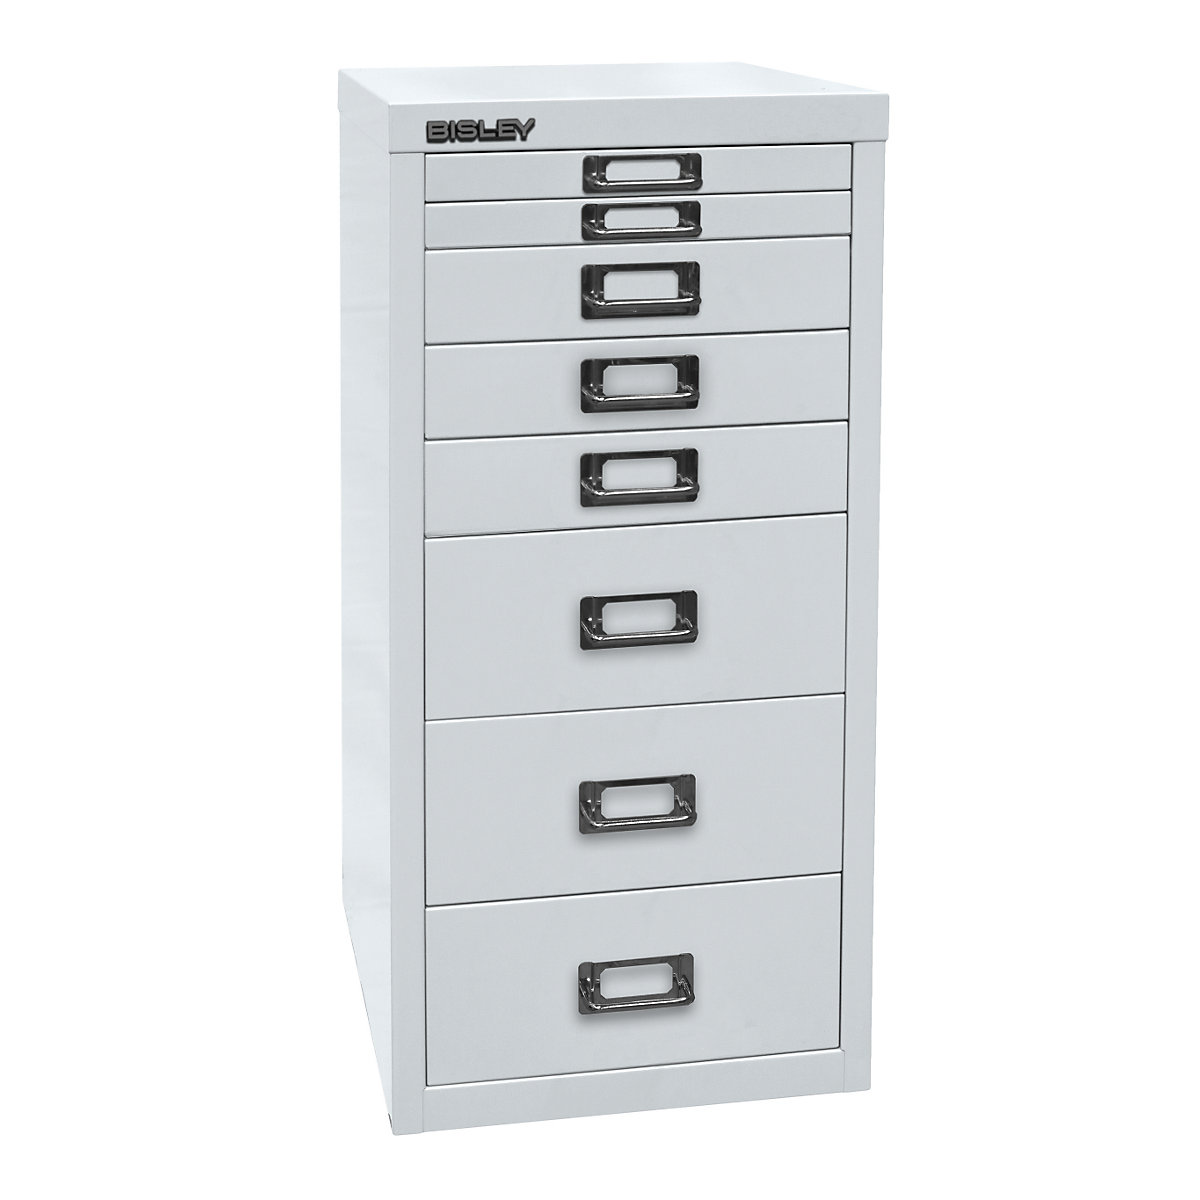 MultiDrawer™ 29 series – BISLEY, A4, 8 drawers, light grey-10